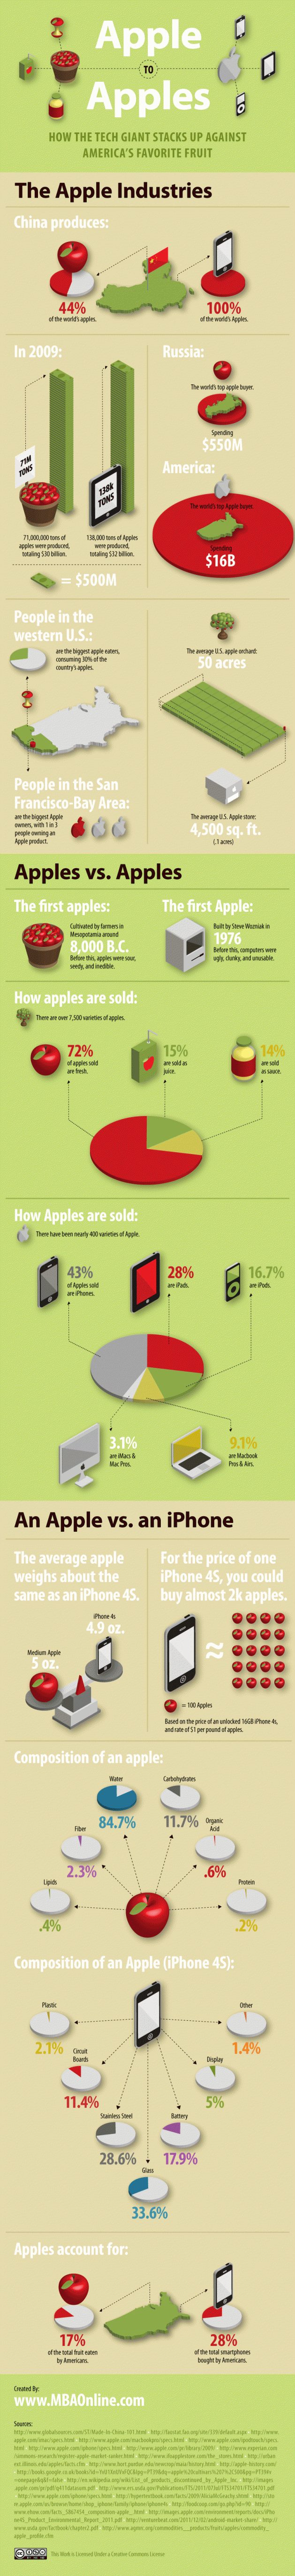 Apple vs Apples